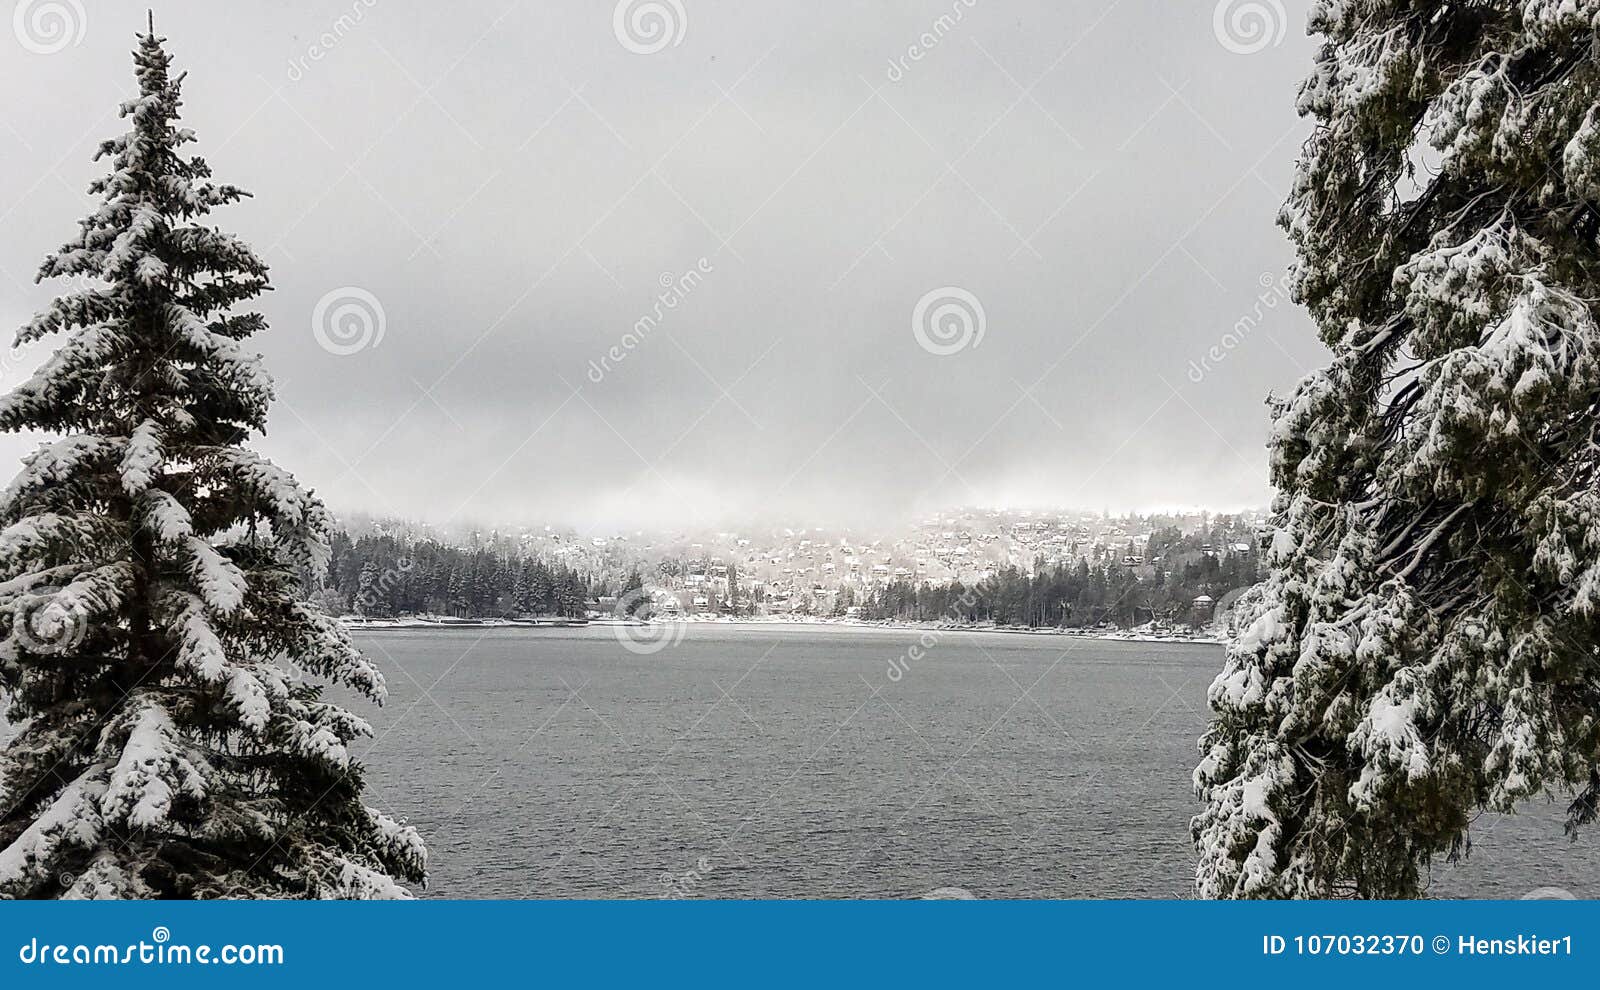 Winter Storm Snow On Lake Arrowhead Southern California Stock